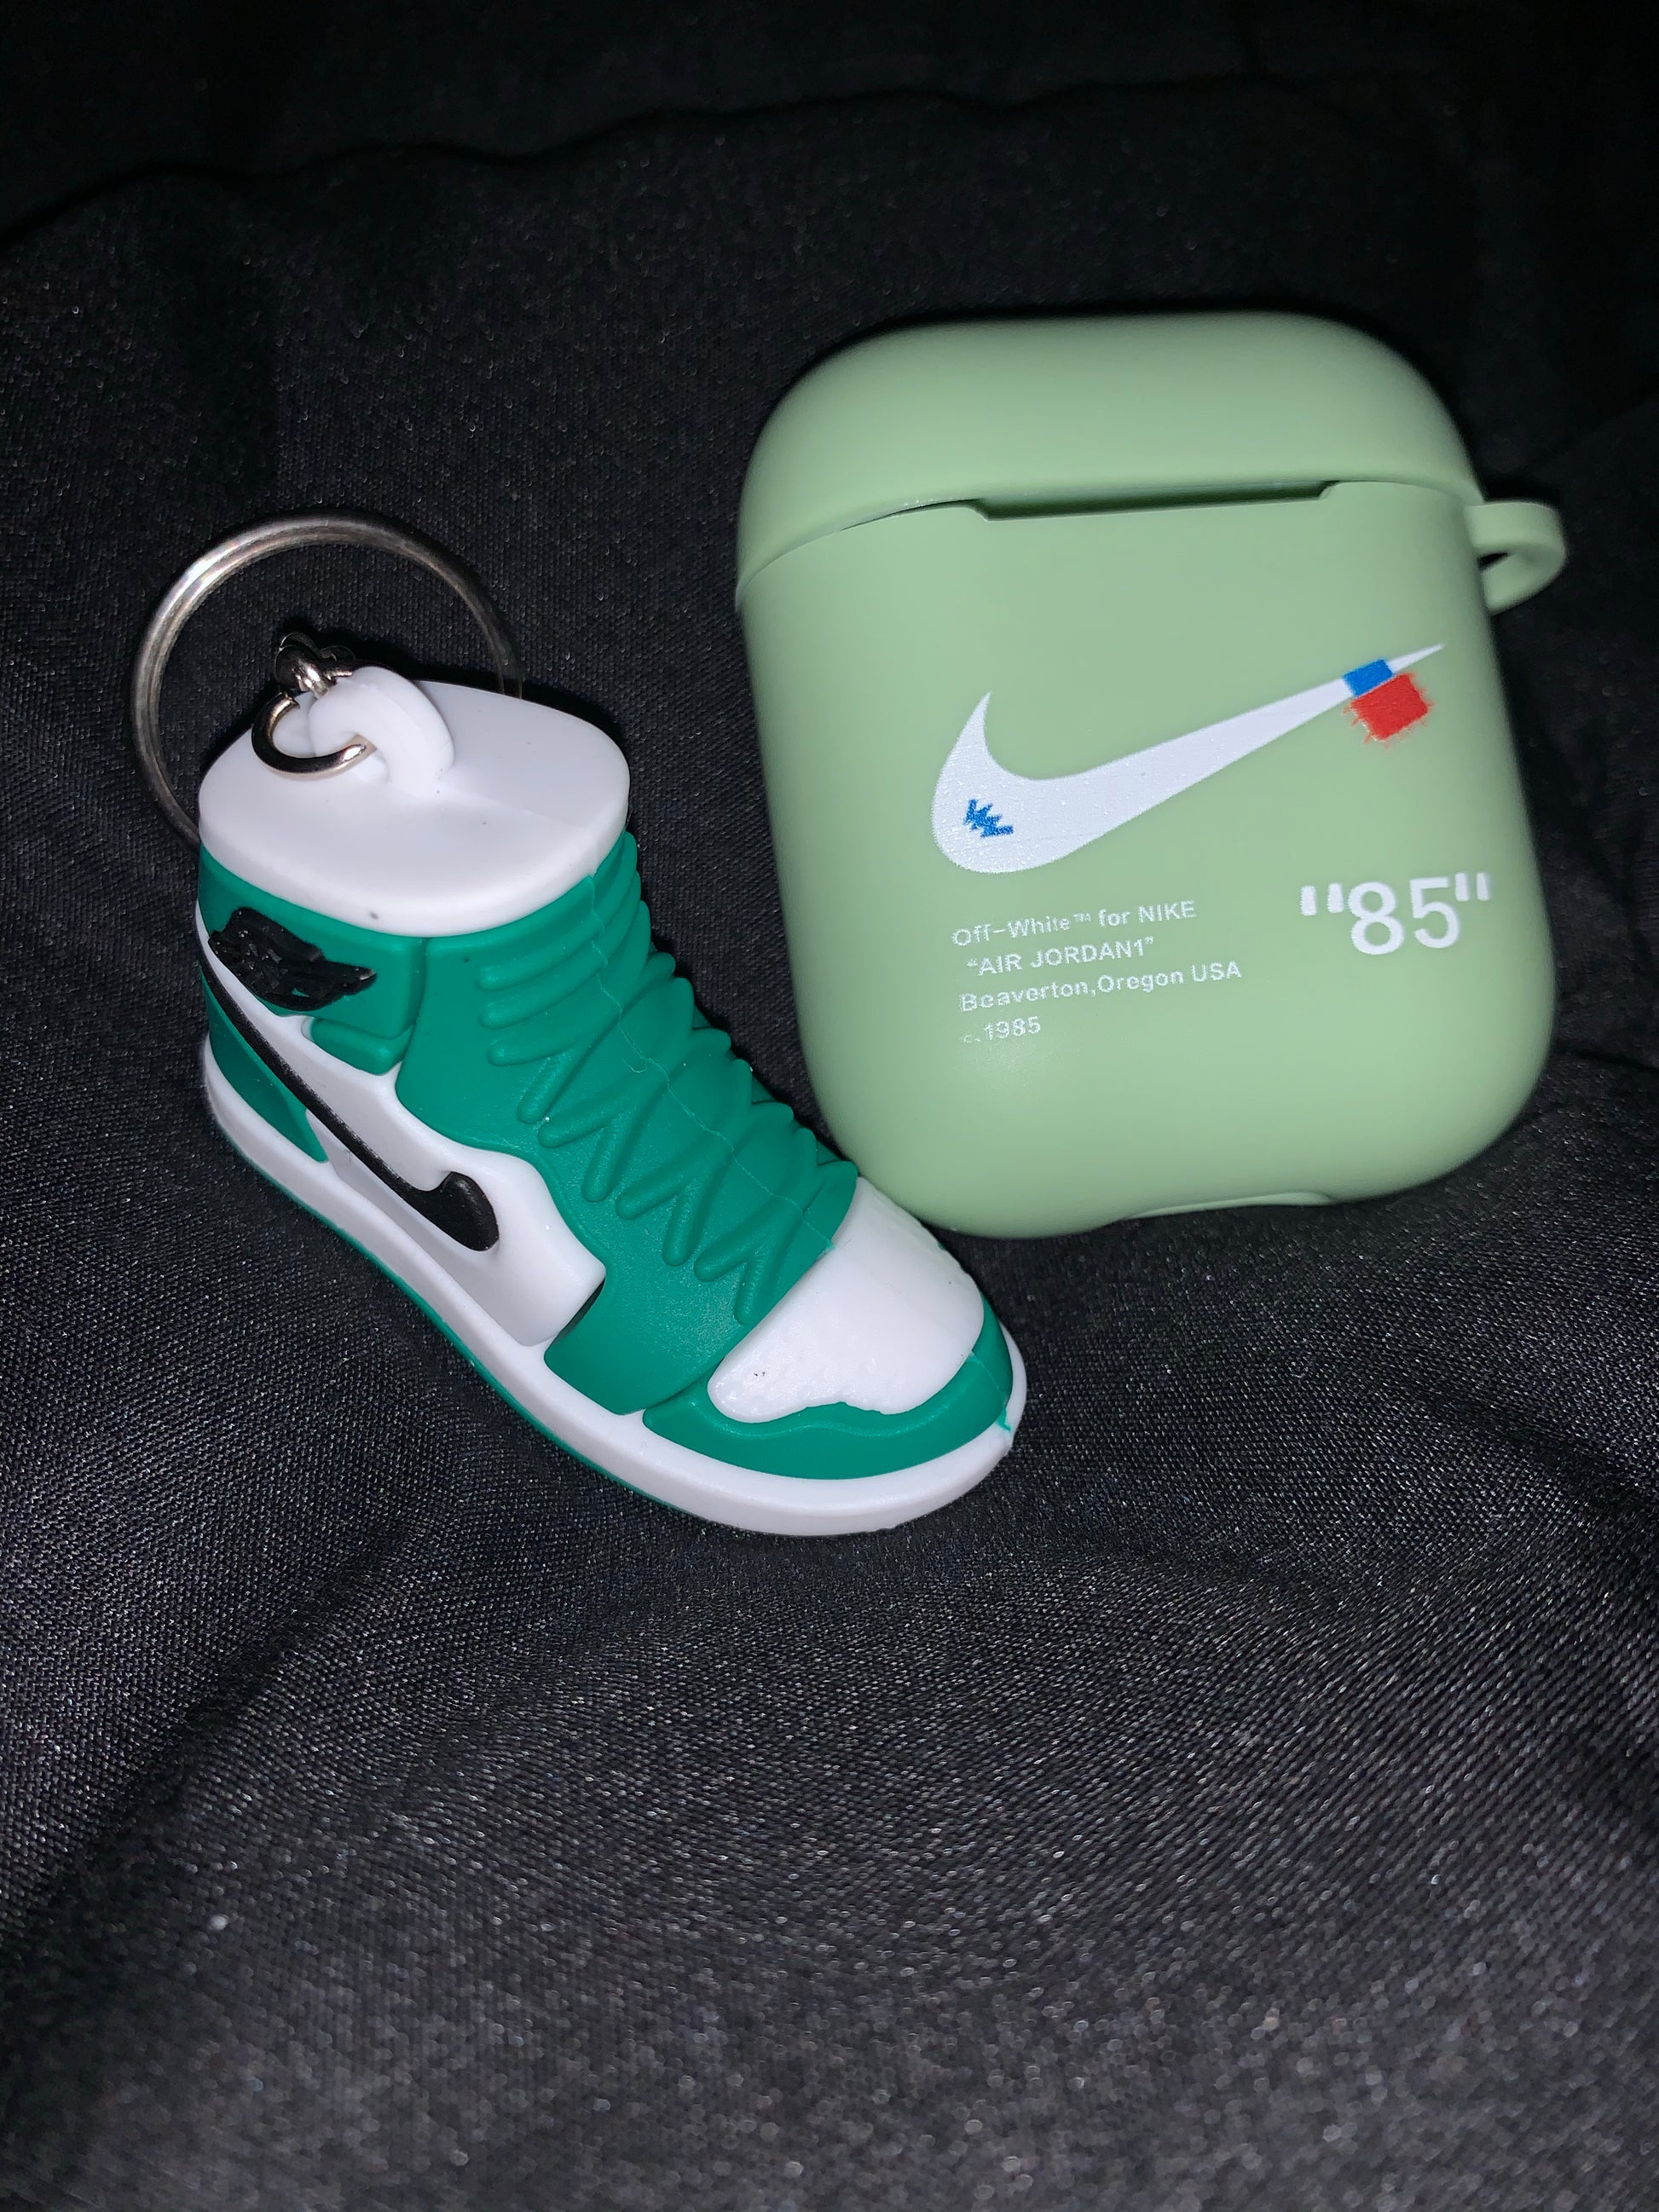 Nike airpod case